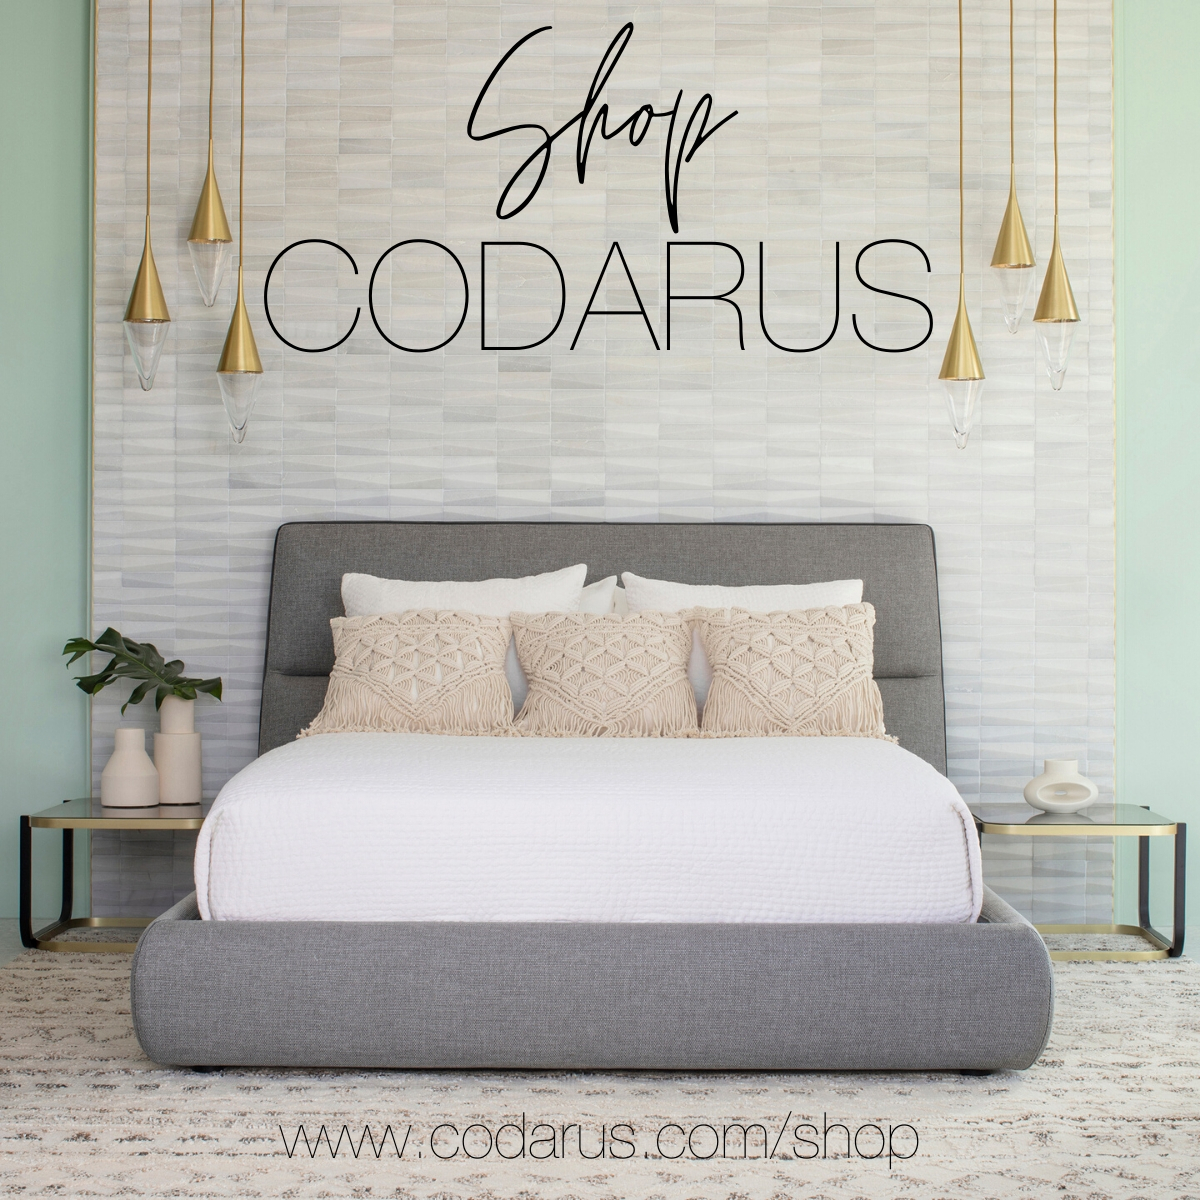 CODARUS announces a new SHOP feature - News from Laguna Design Center